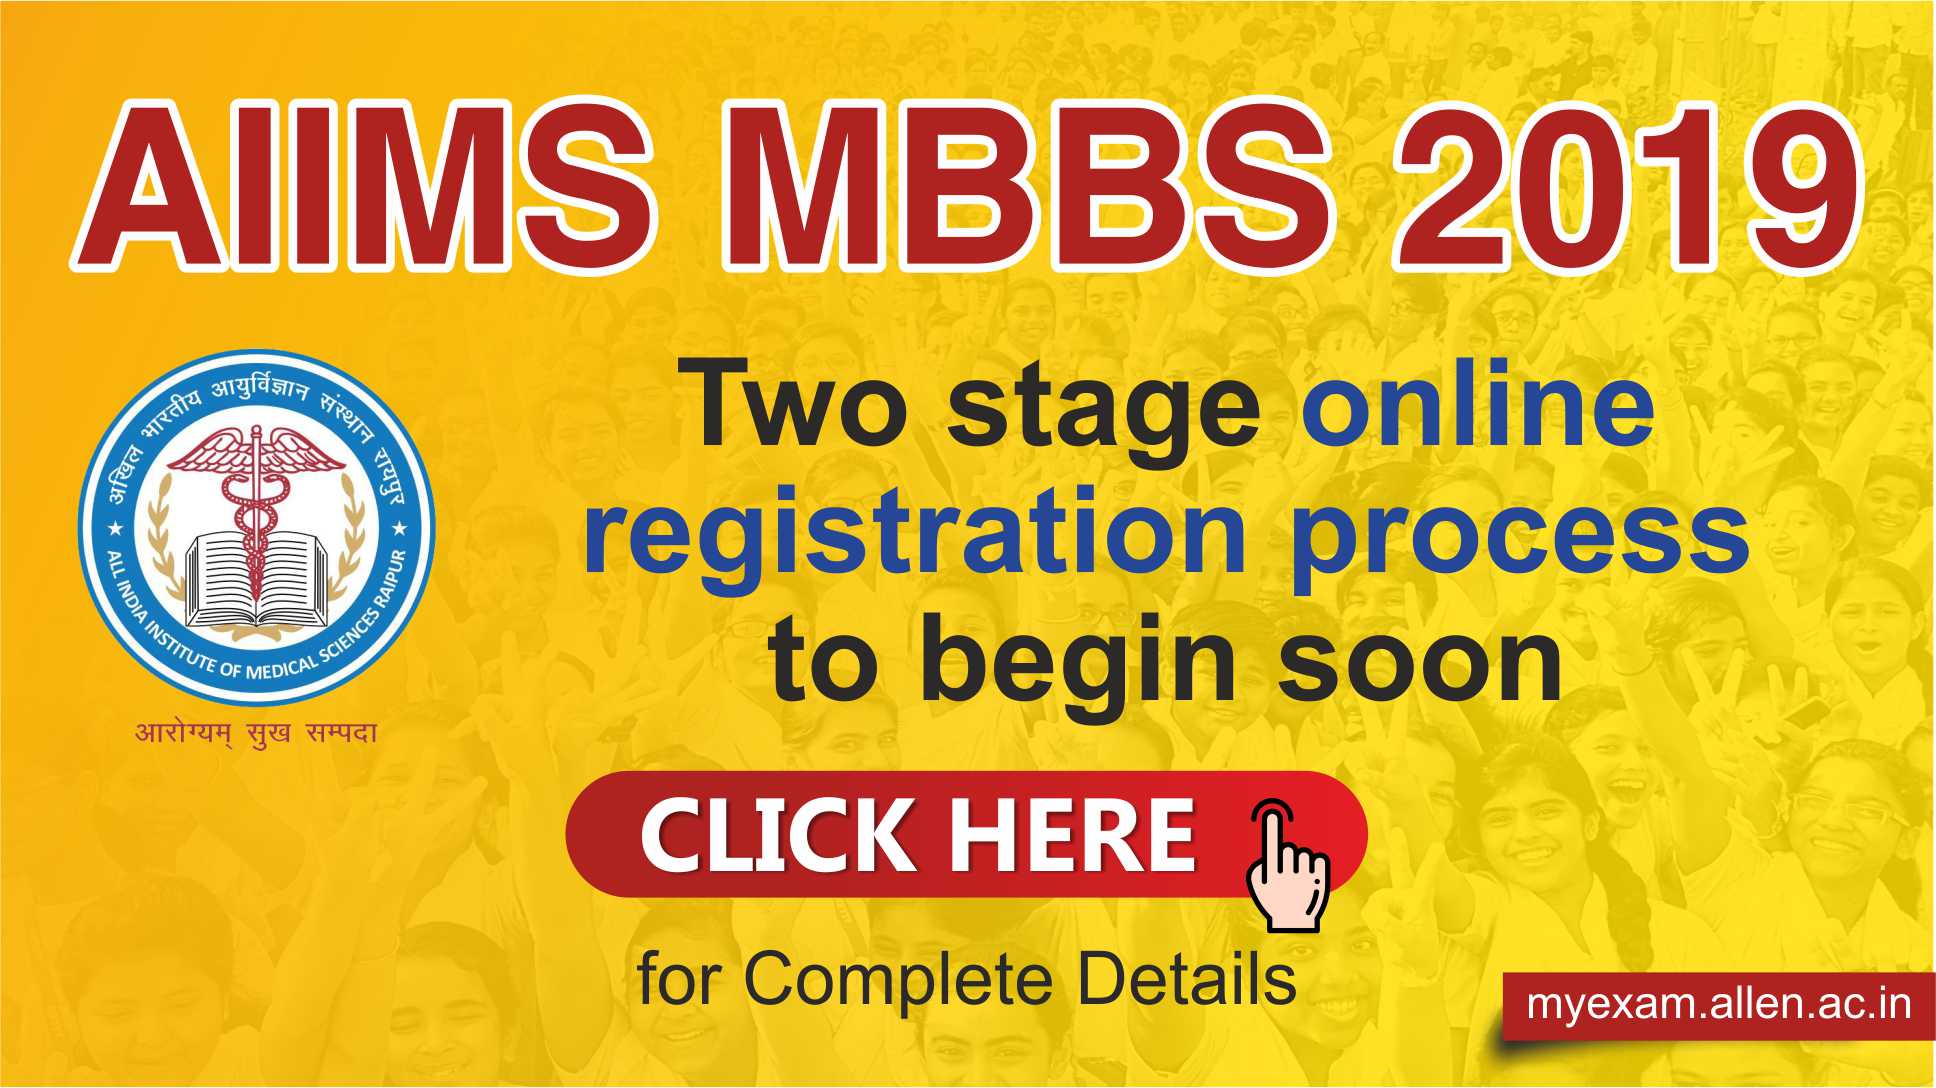 AIIMS MBBS 2019 Registration Process